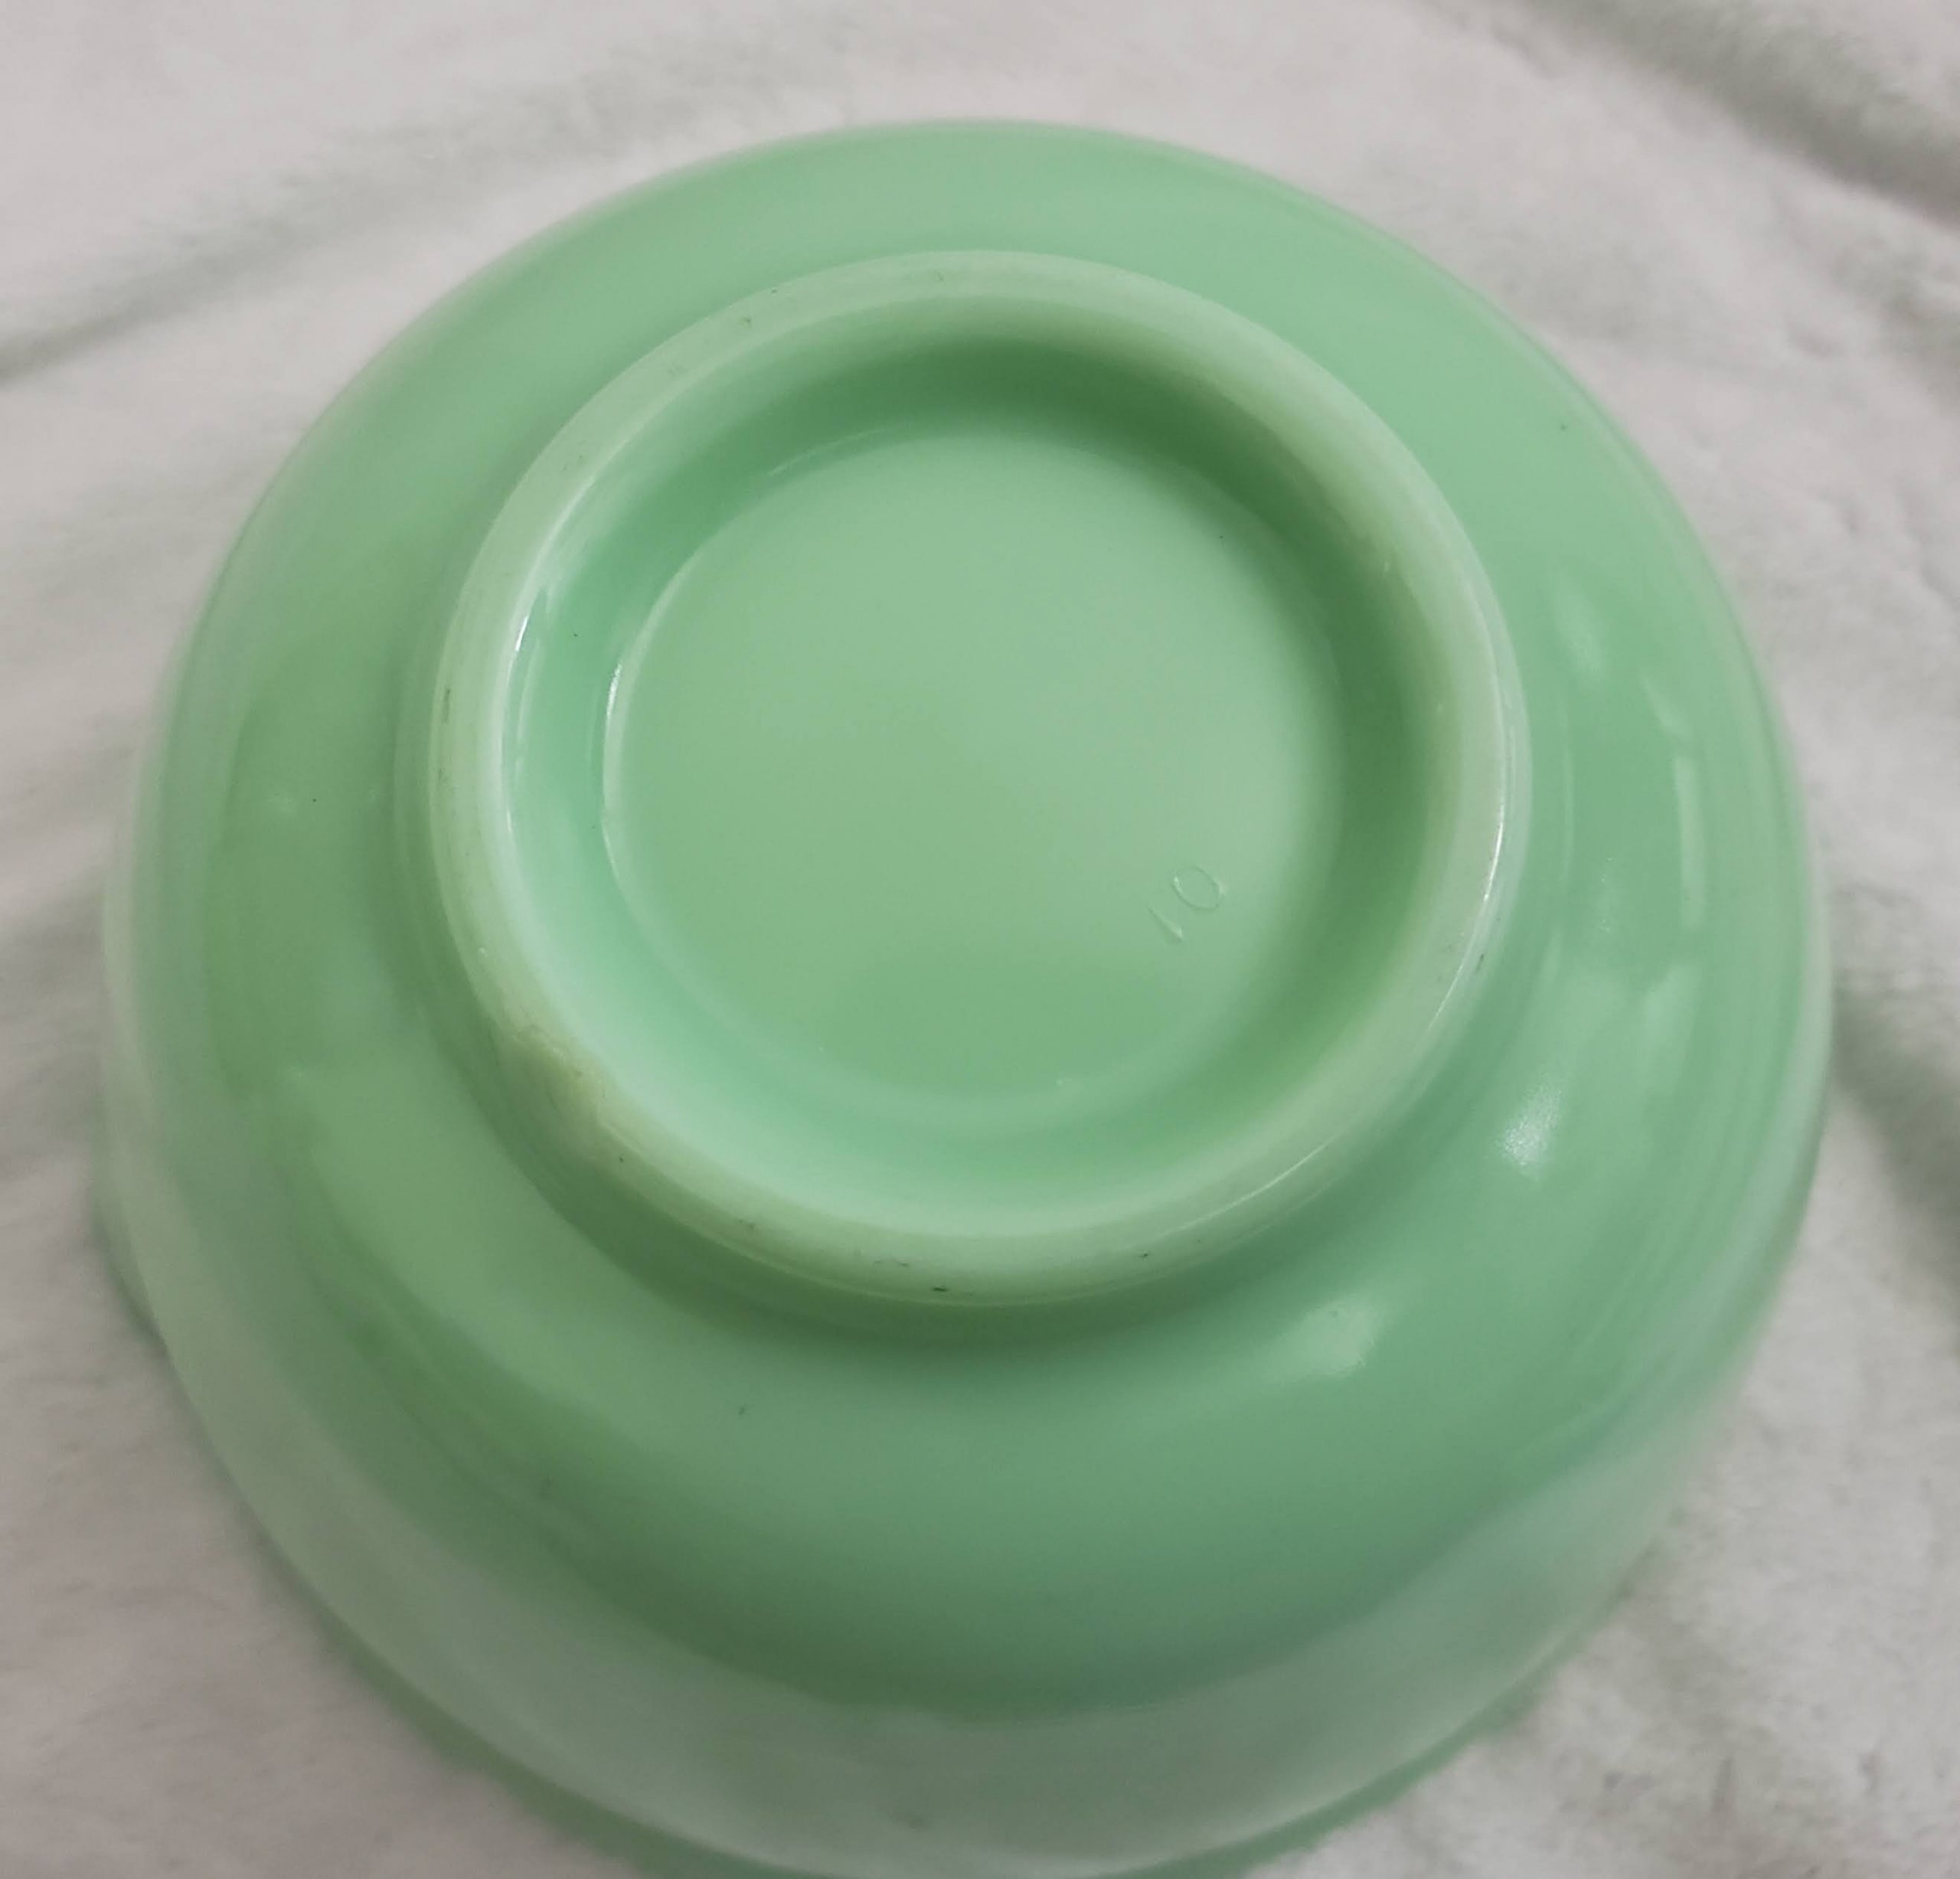 https://serstyle.com/wp-content/uploads/2020/03/Vintage-Jadeite-Mixing-Bowl-bottom-scaled.jpg